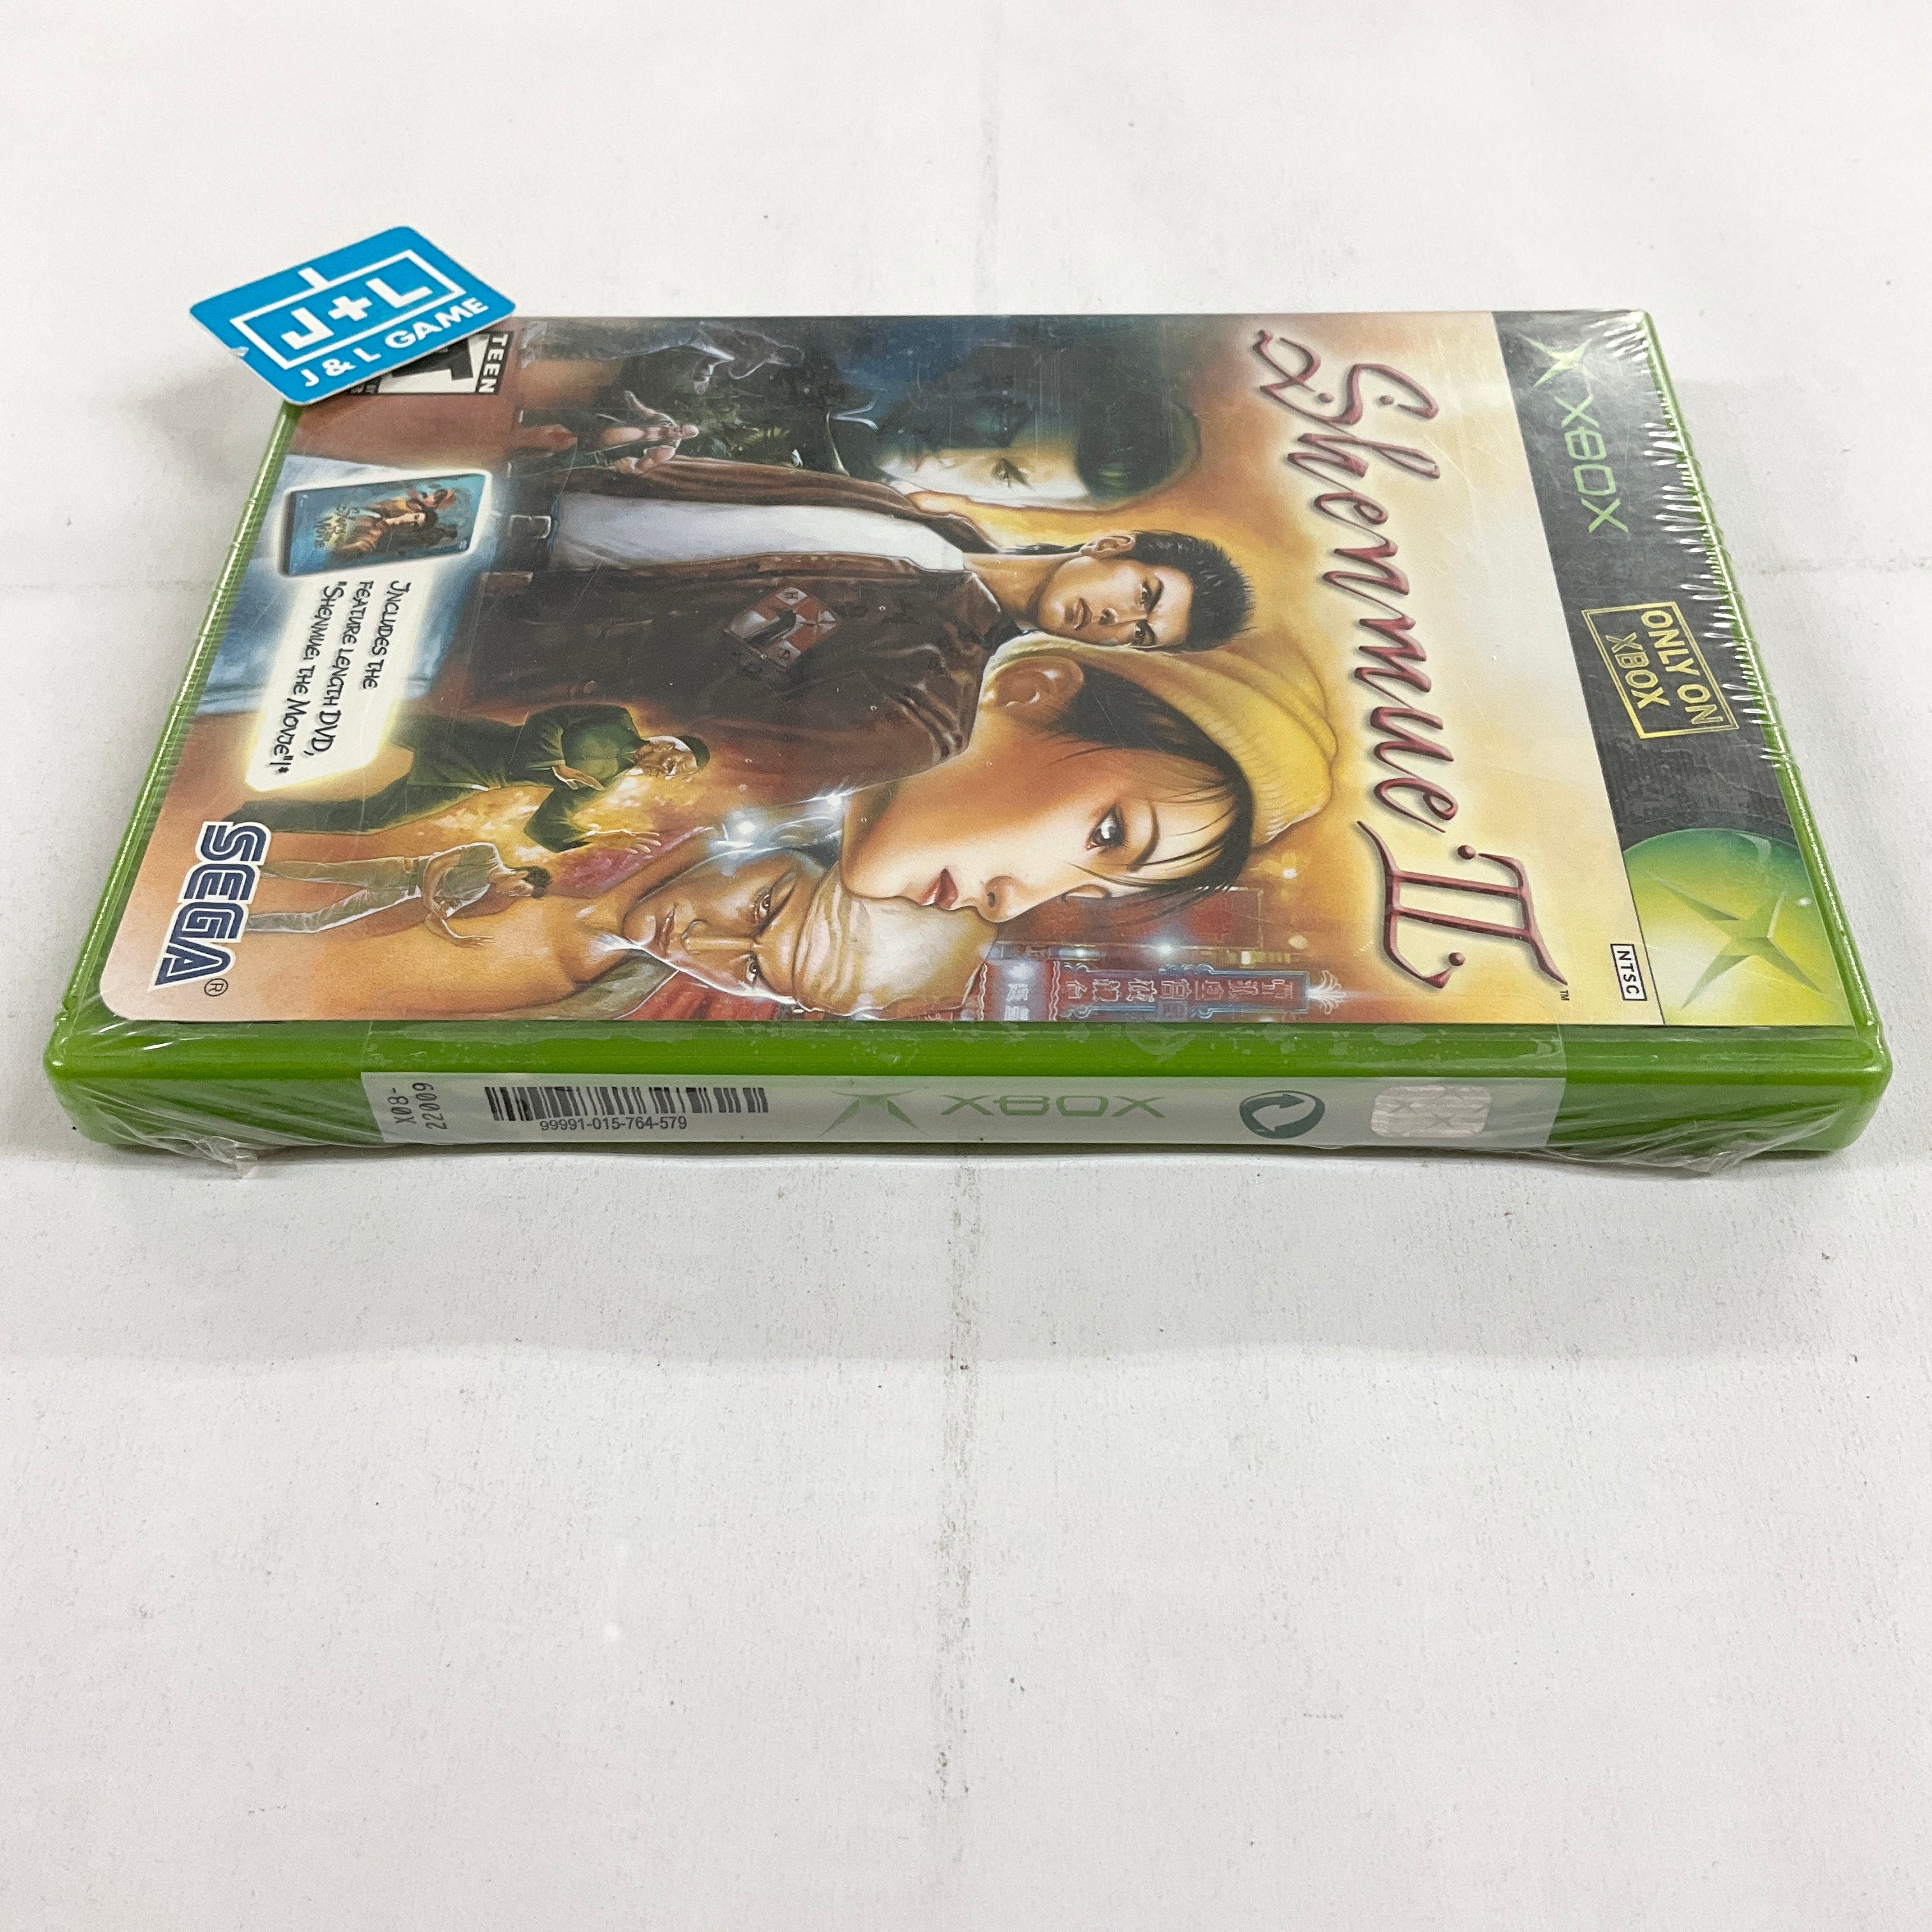 Shenmue II - (XB) Xbox Video Games SEGA   